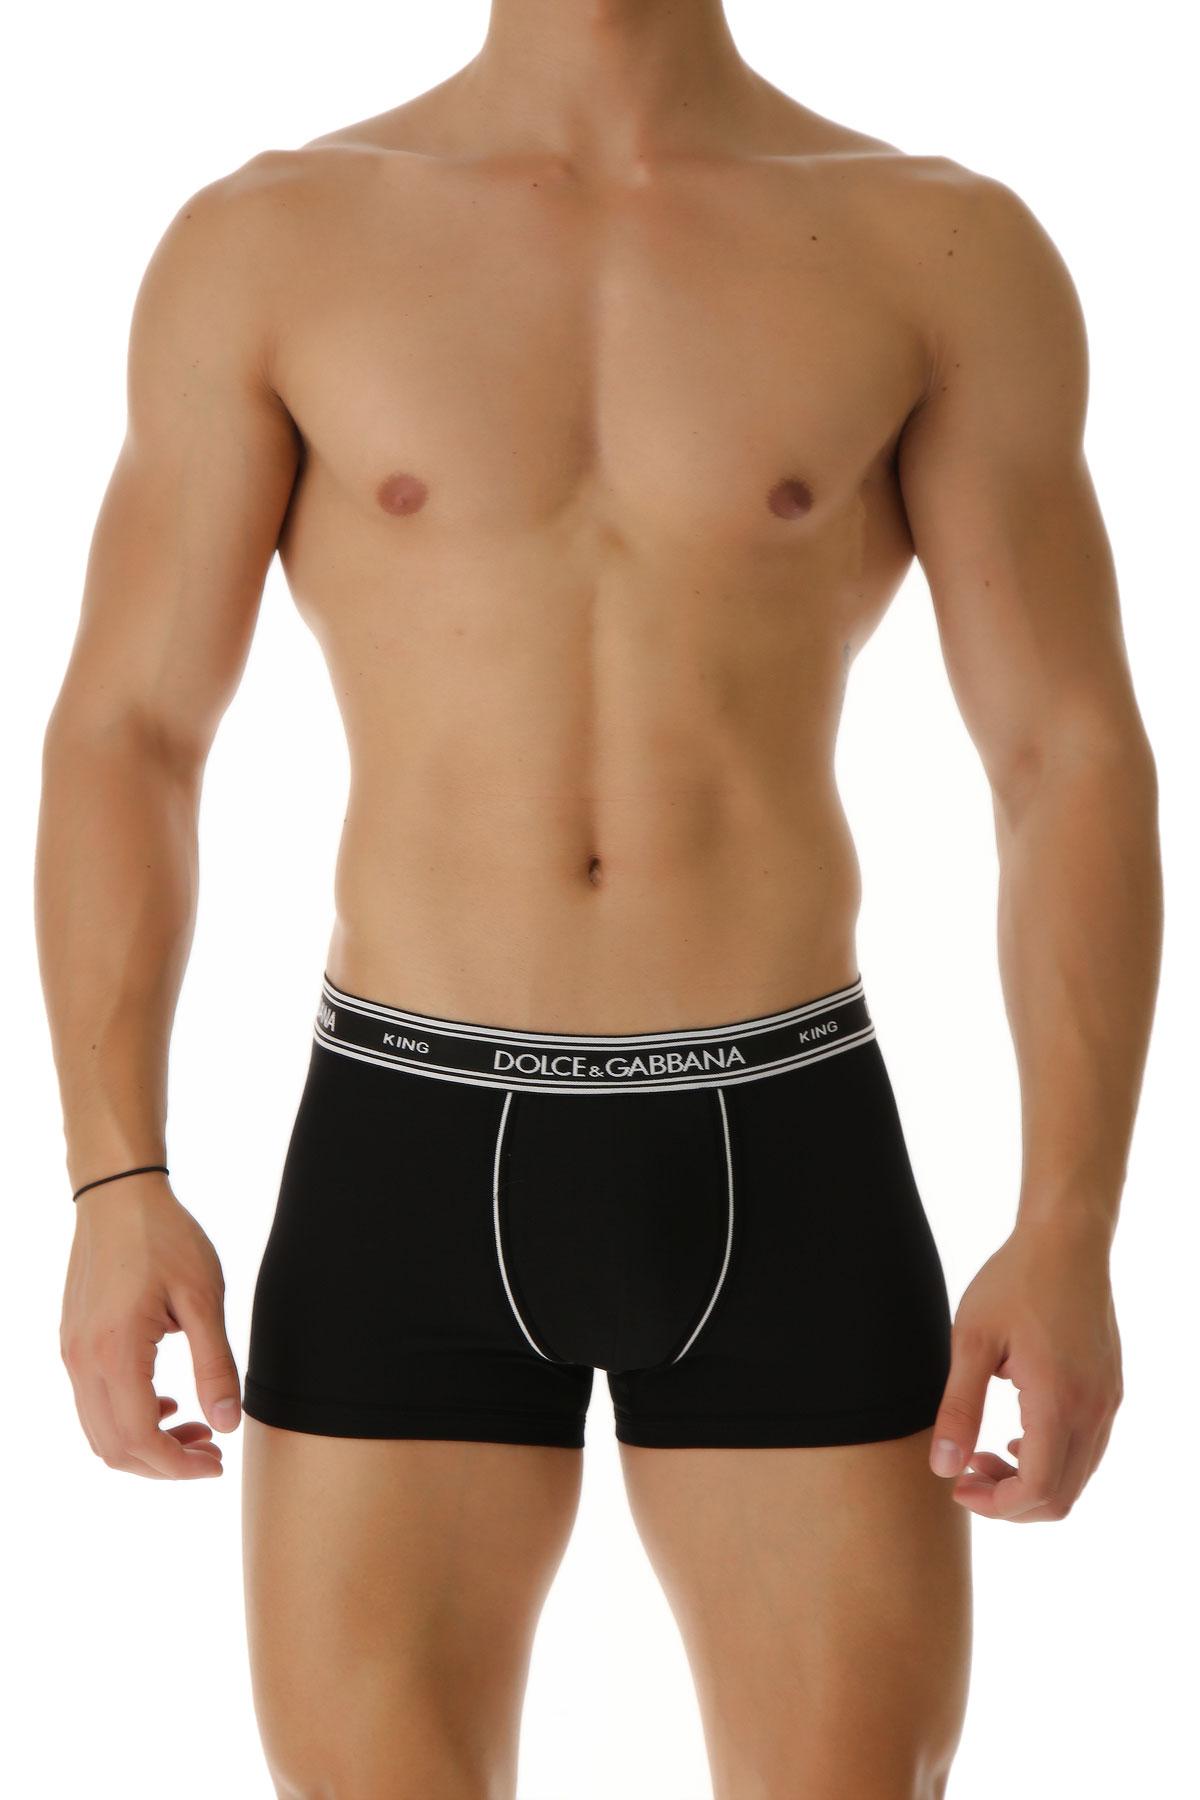 Dolce & Gabbana Underwear For Men in Black for Men - Lyst